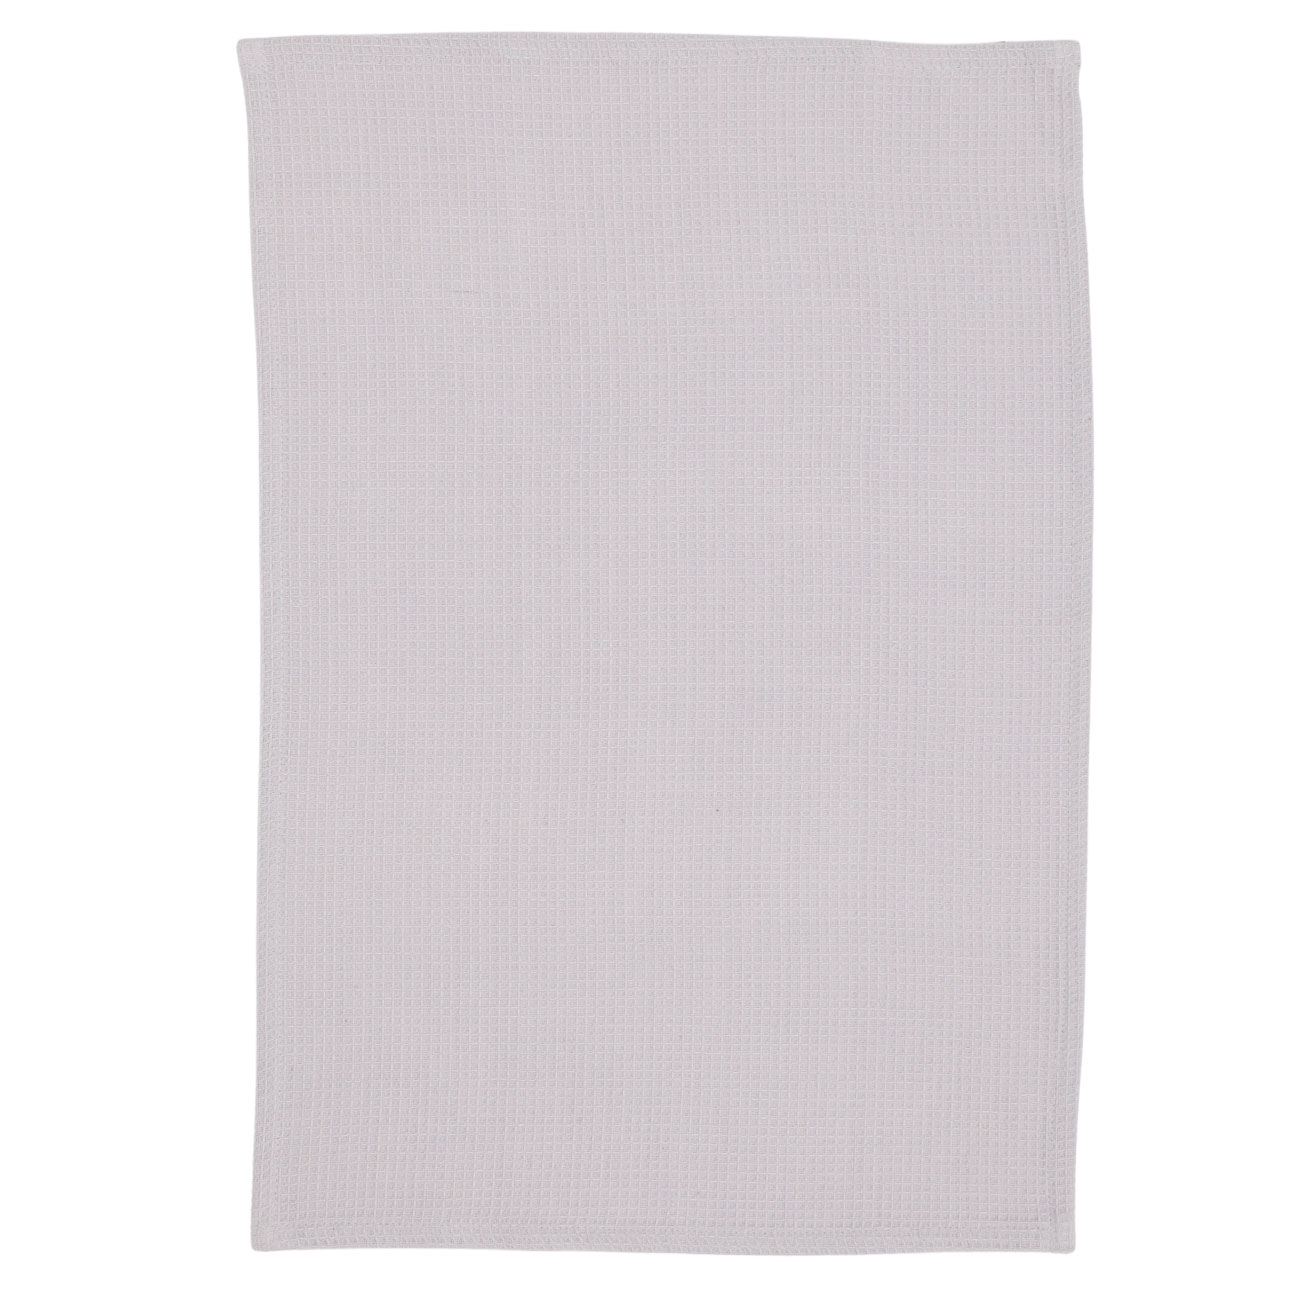 Kitchen towel, 2 pcs, 40x60 cm, cotton, white / gray, Family, Scroll изображение № 4